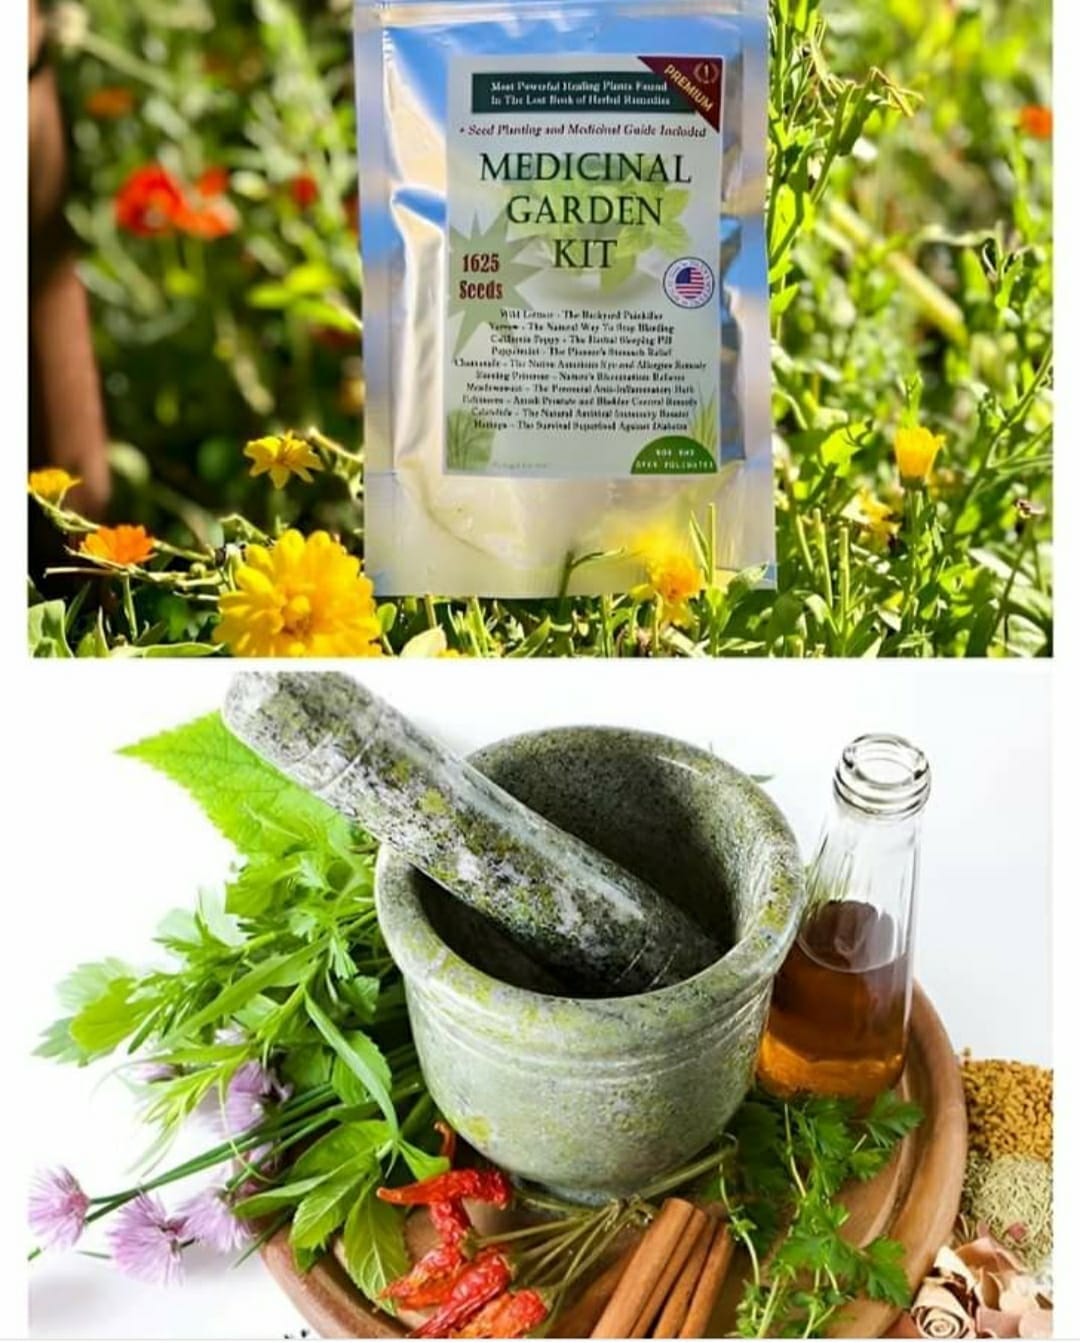 Medicinal Garden Kit Review Review